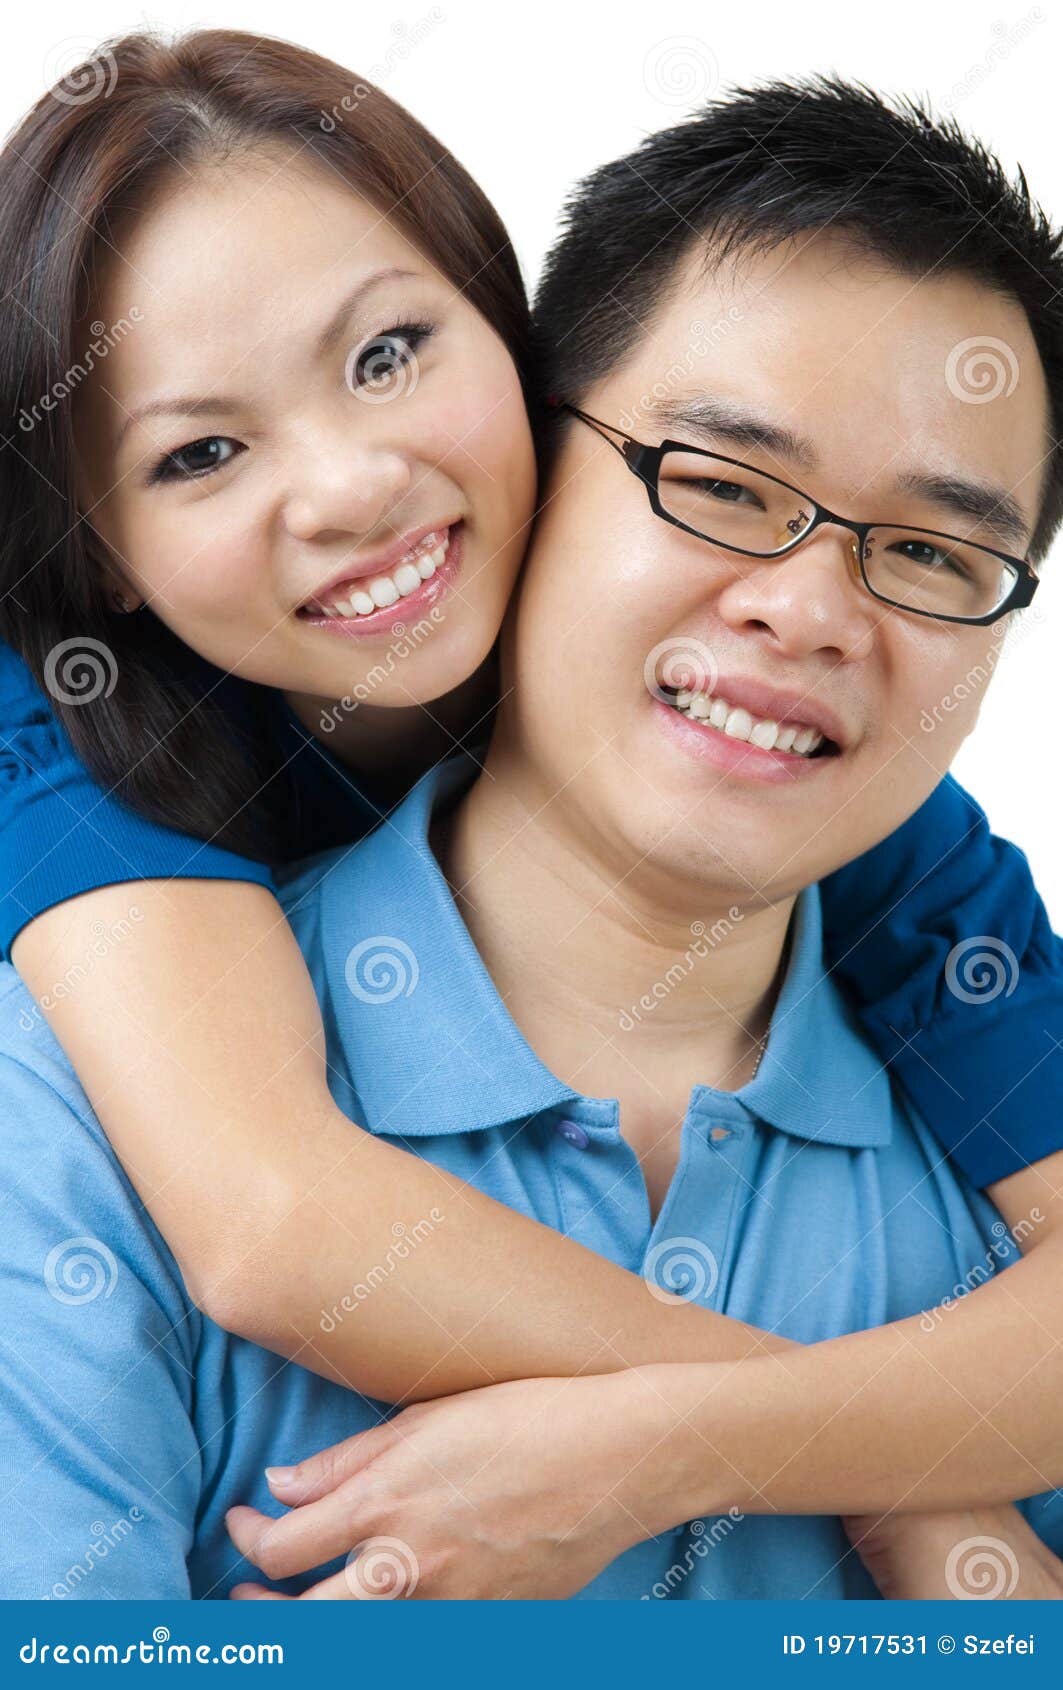 https://thumbs.dreamstime.com/z/asian-couple-19717531.jpg